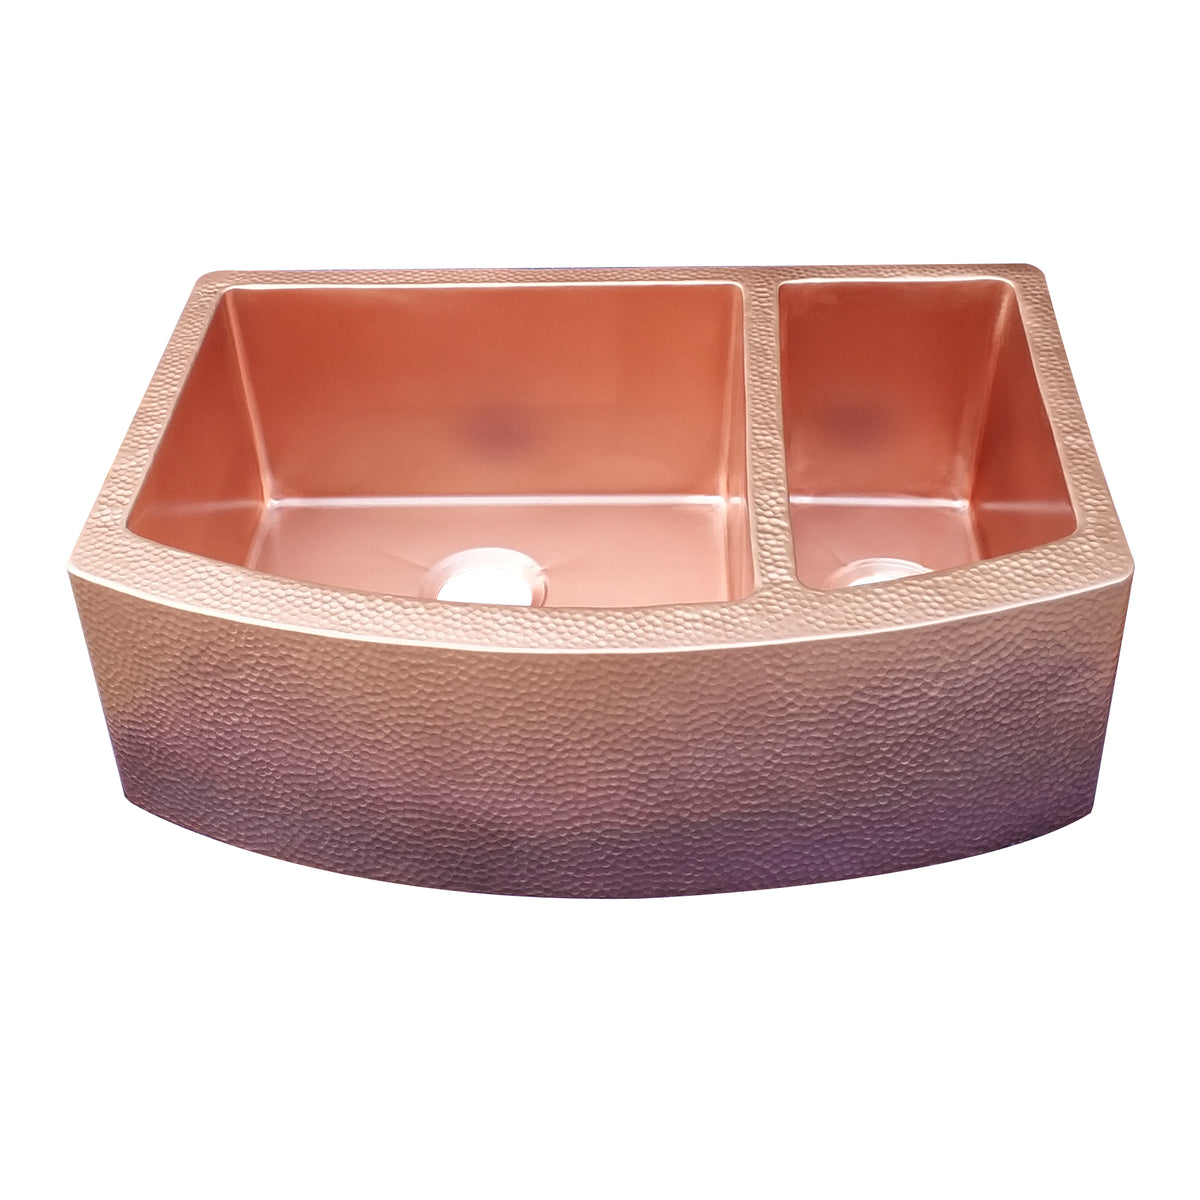 42 Copper Range Hood – Rustic Sinks